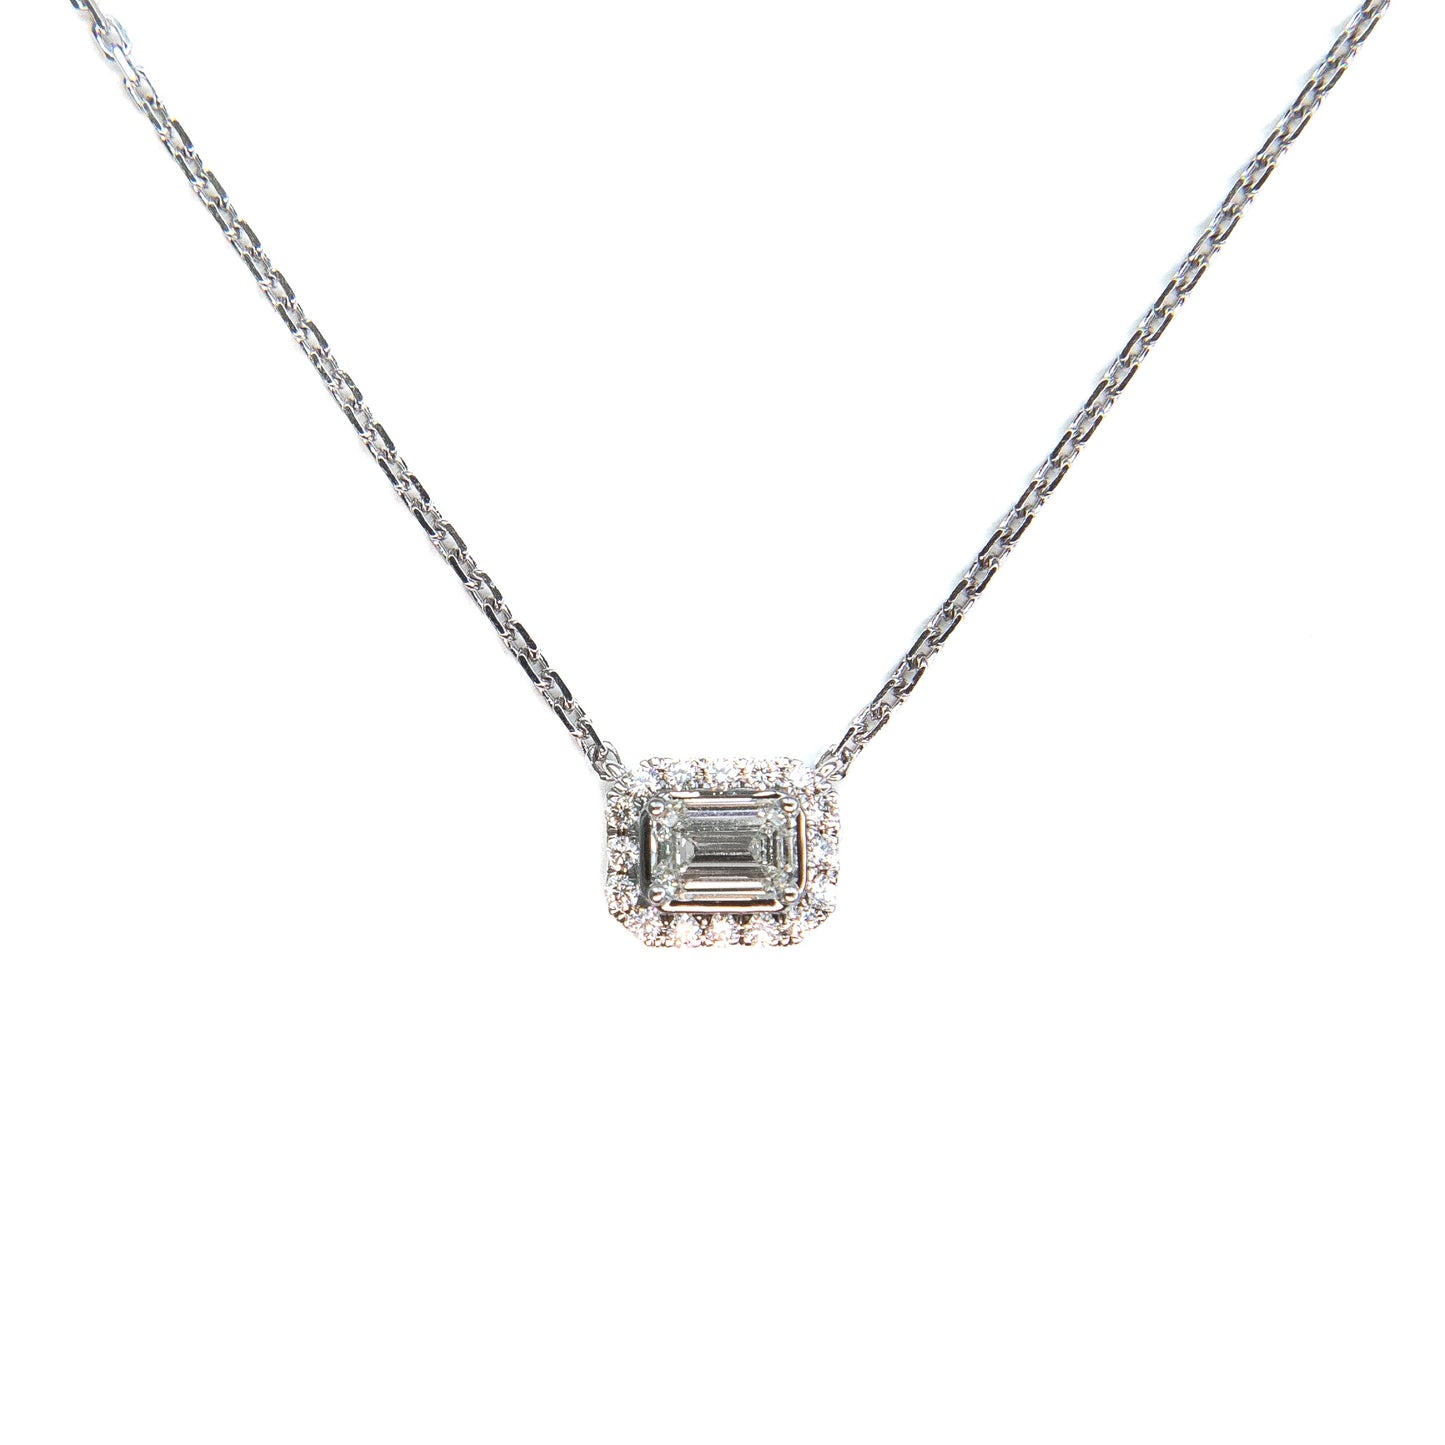 Emerald cut diamond and halo necklace